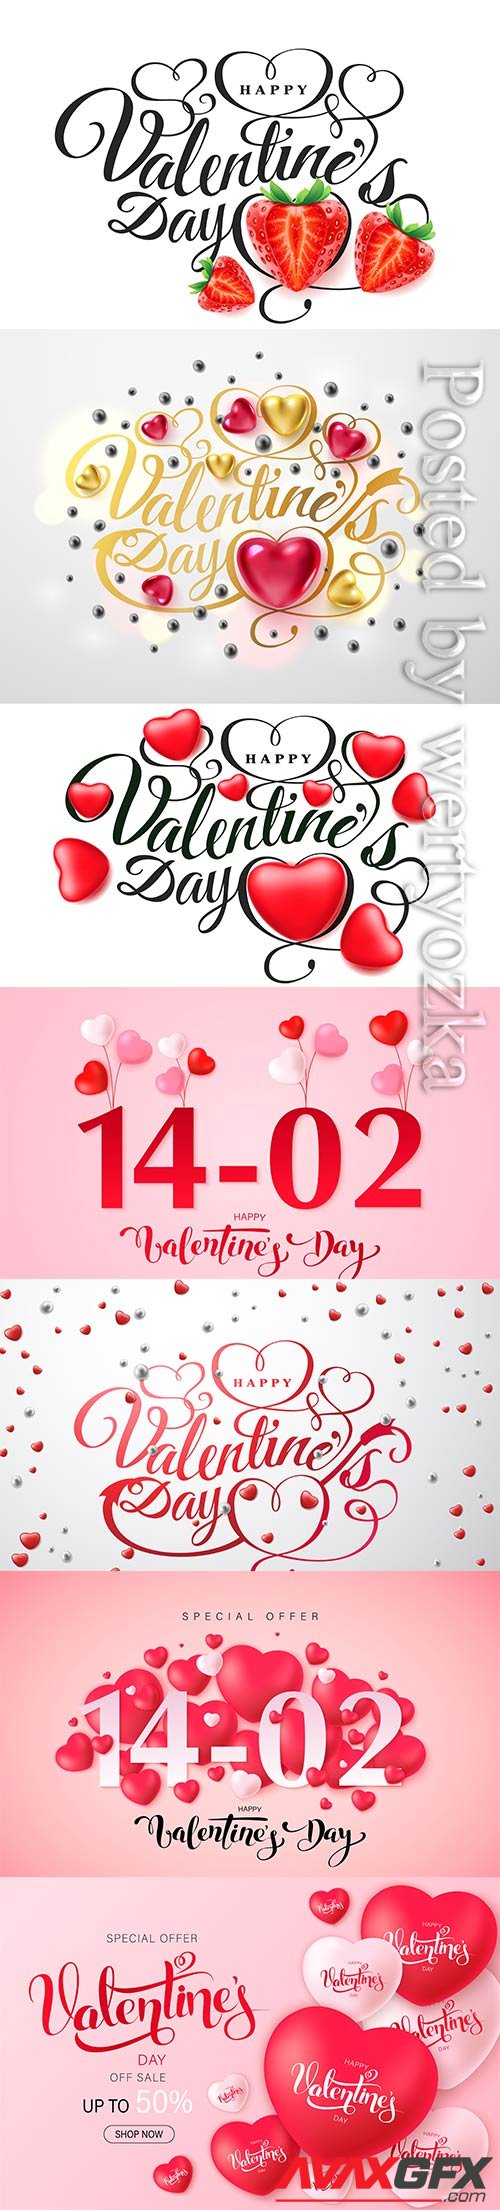 Happy valentine's day vector greeting card design